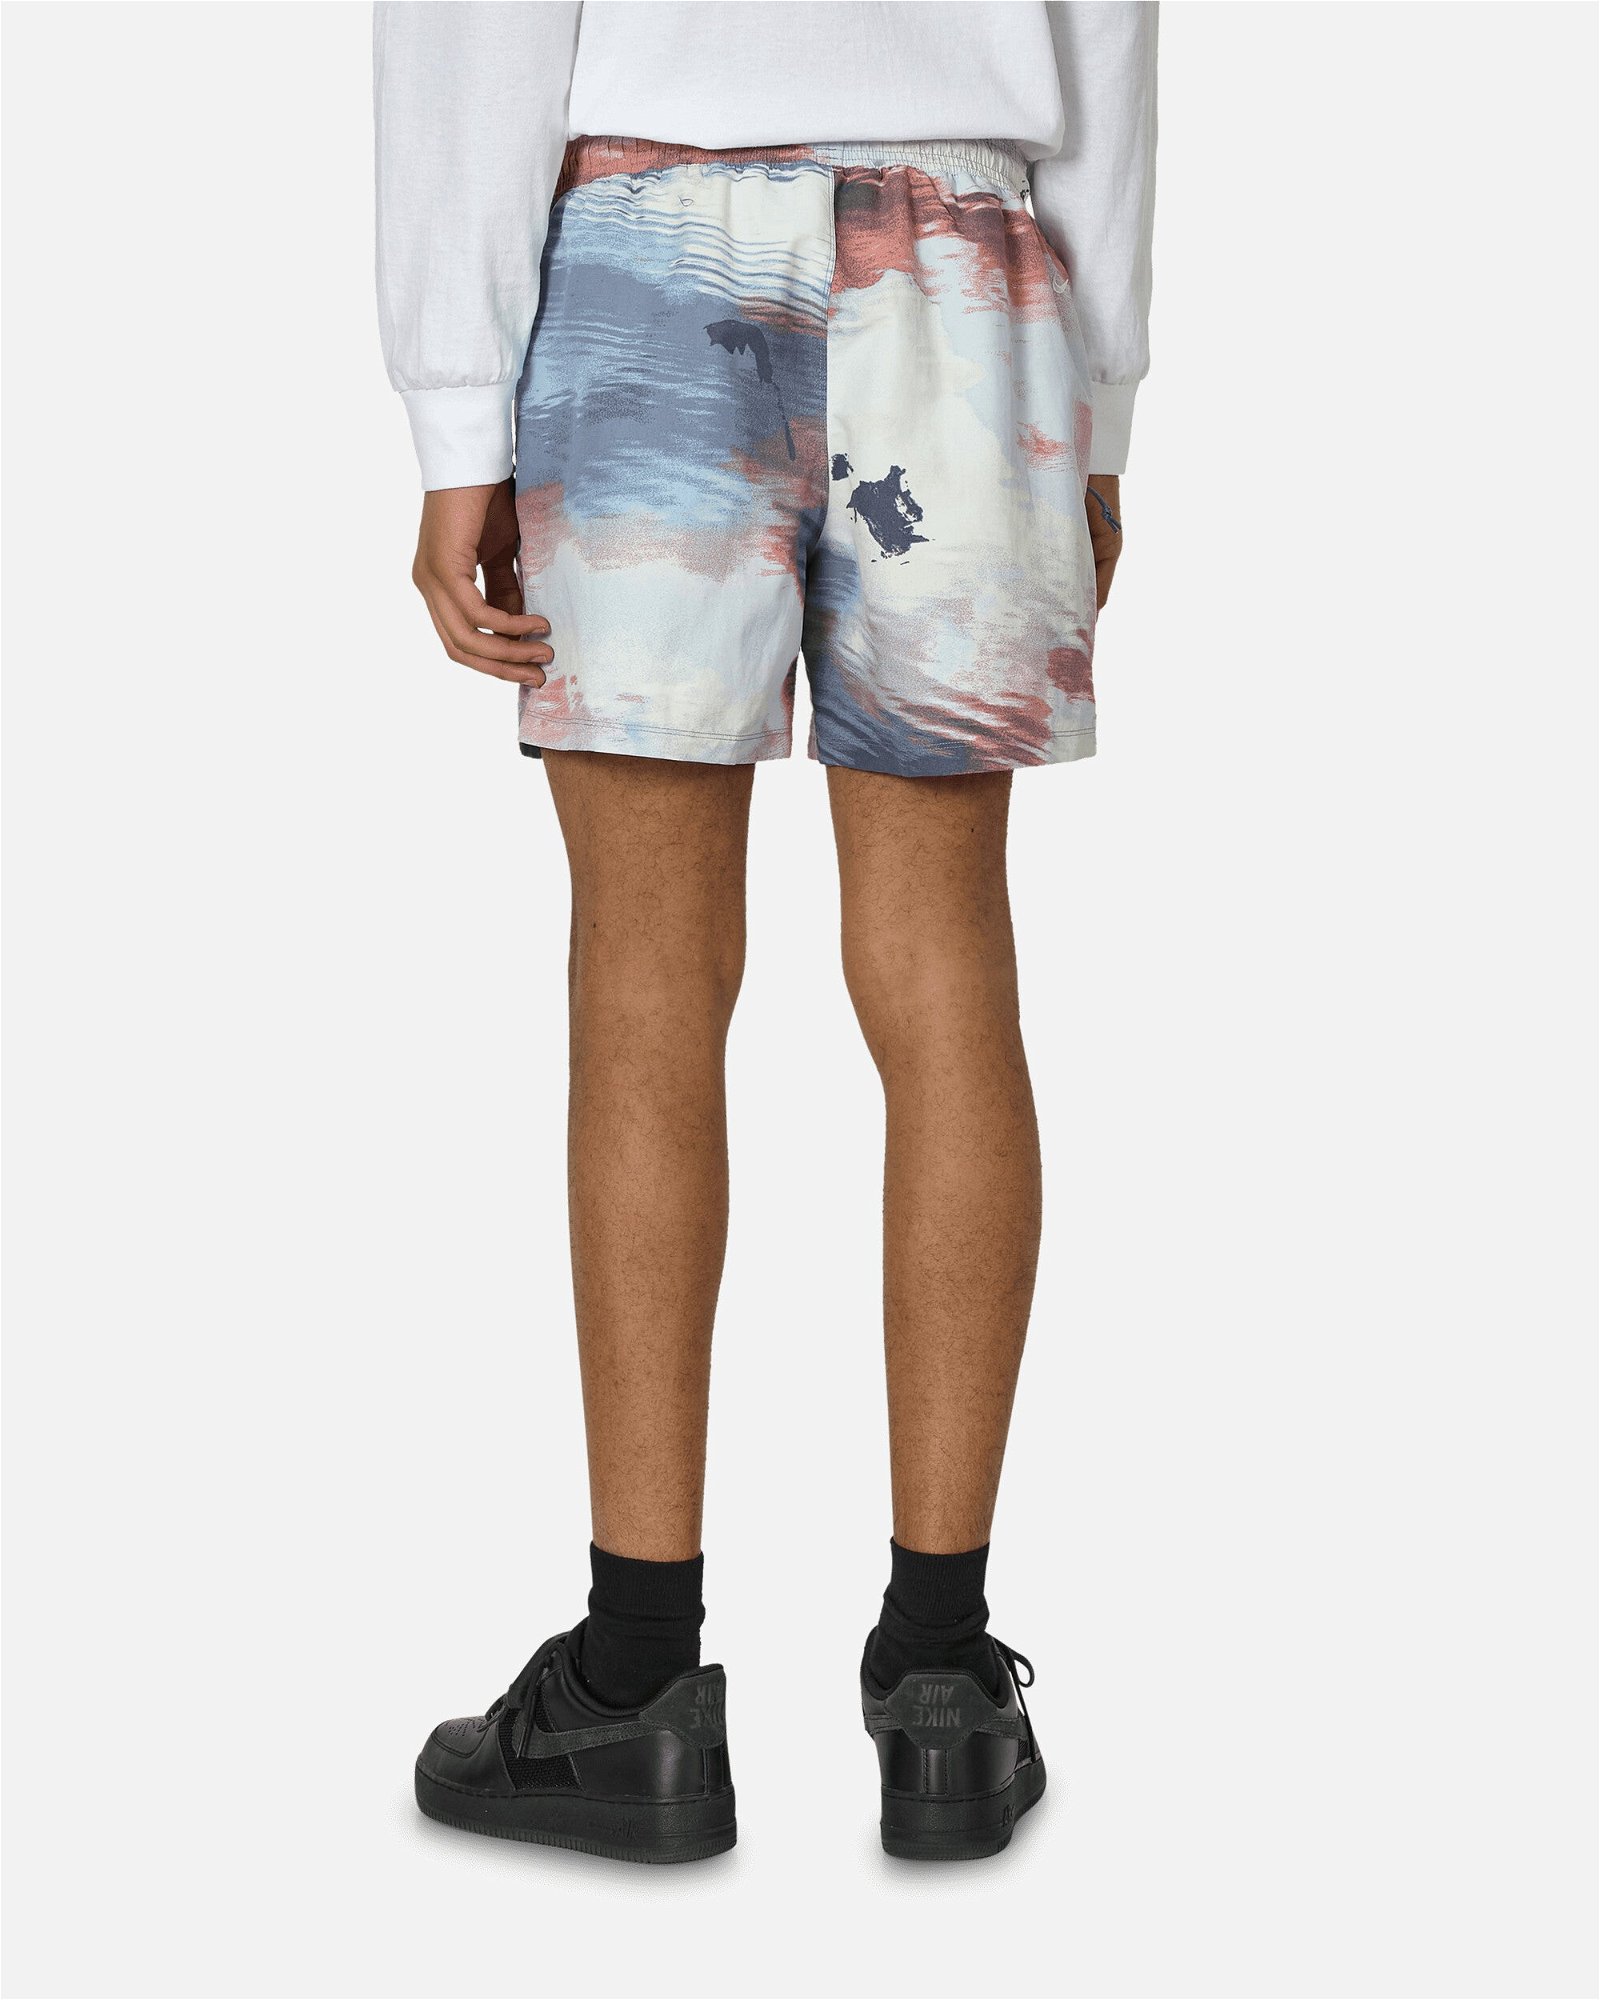 Reservoir Goat Allover Print Shorts men Casual Shorts